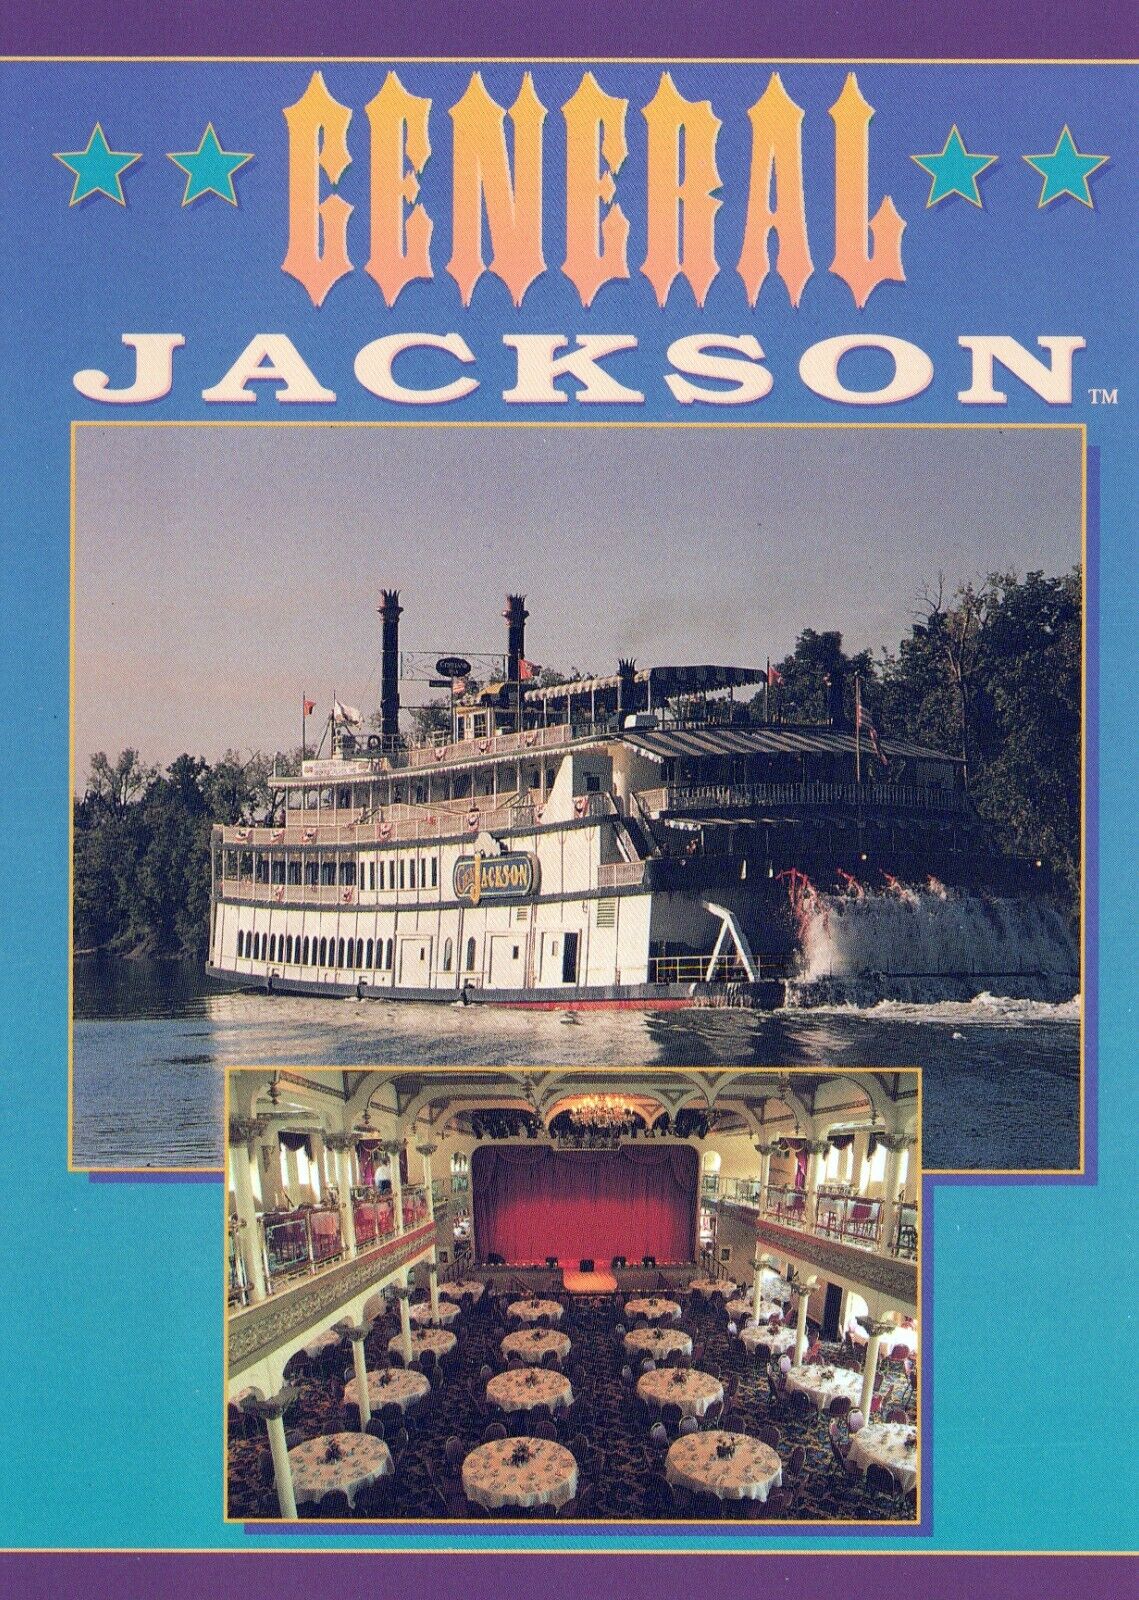 Showboat & Its Restaurant General Jackson Nashville Tennessee UNP 4x6 Postcard